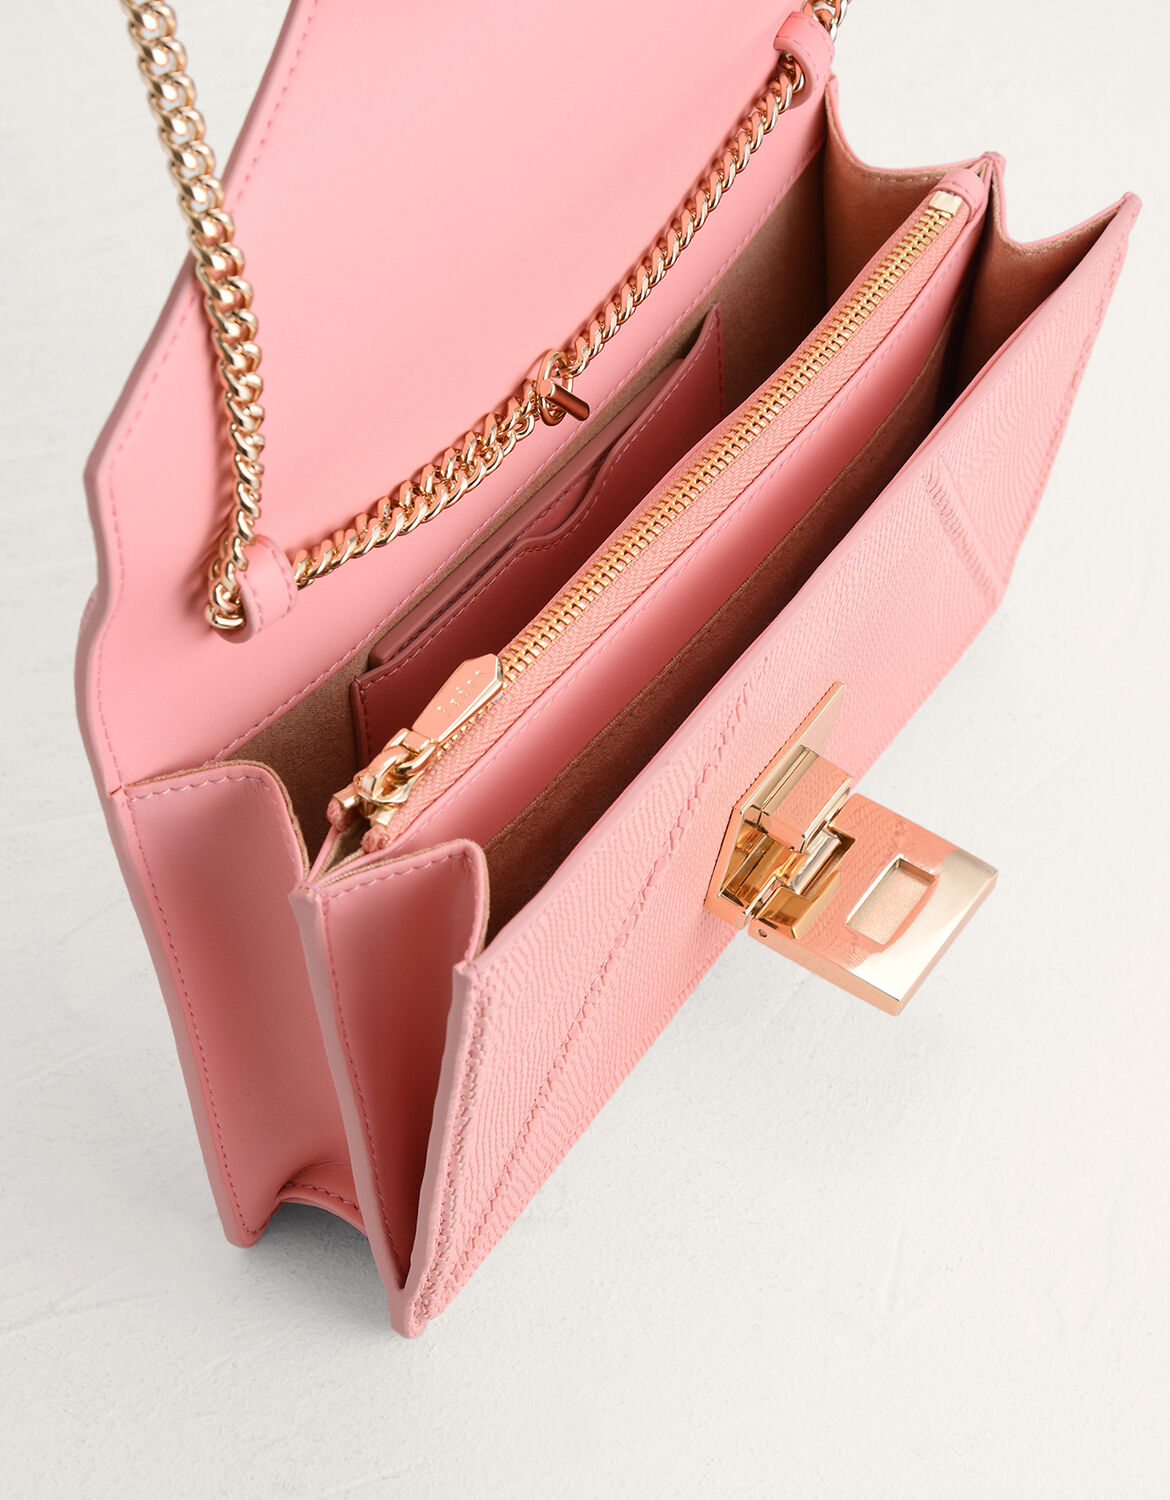 Lizard-Effect Leather Envelope Travel Organizer, Pink